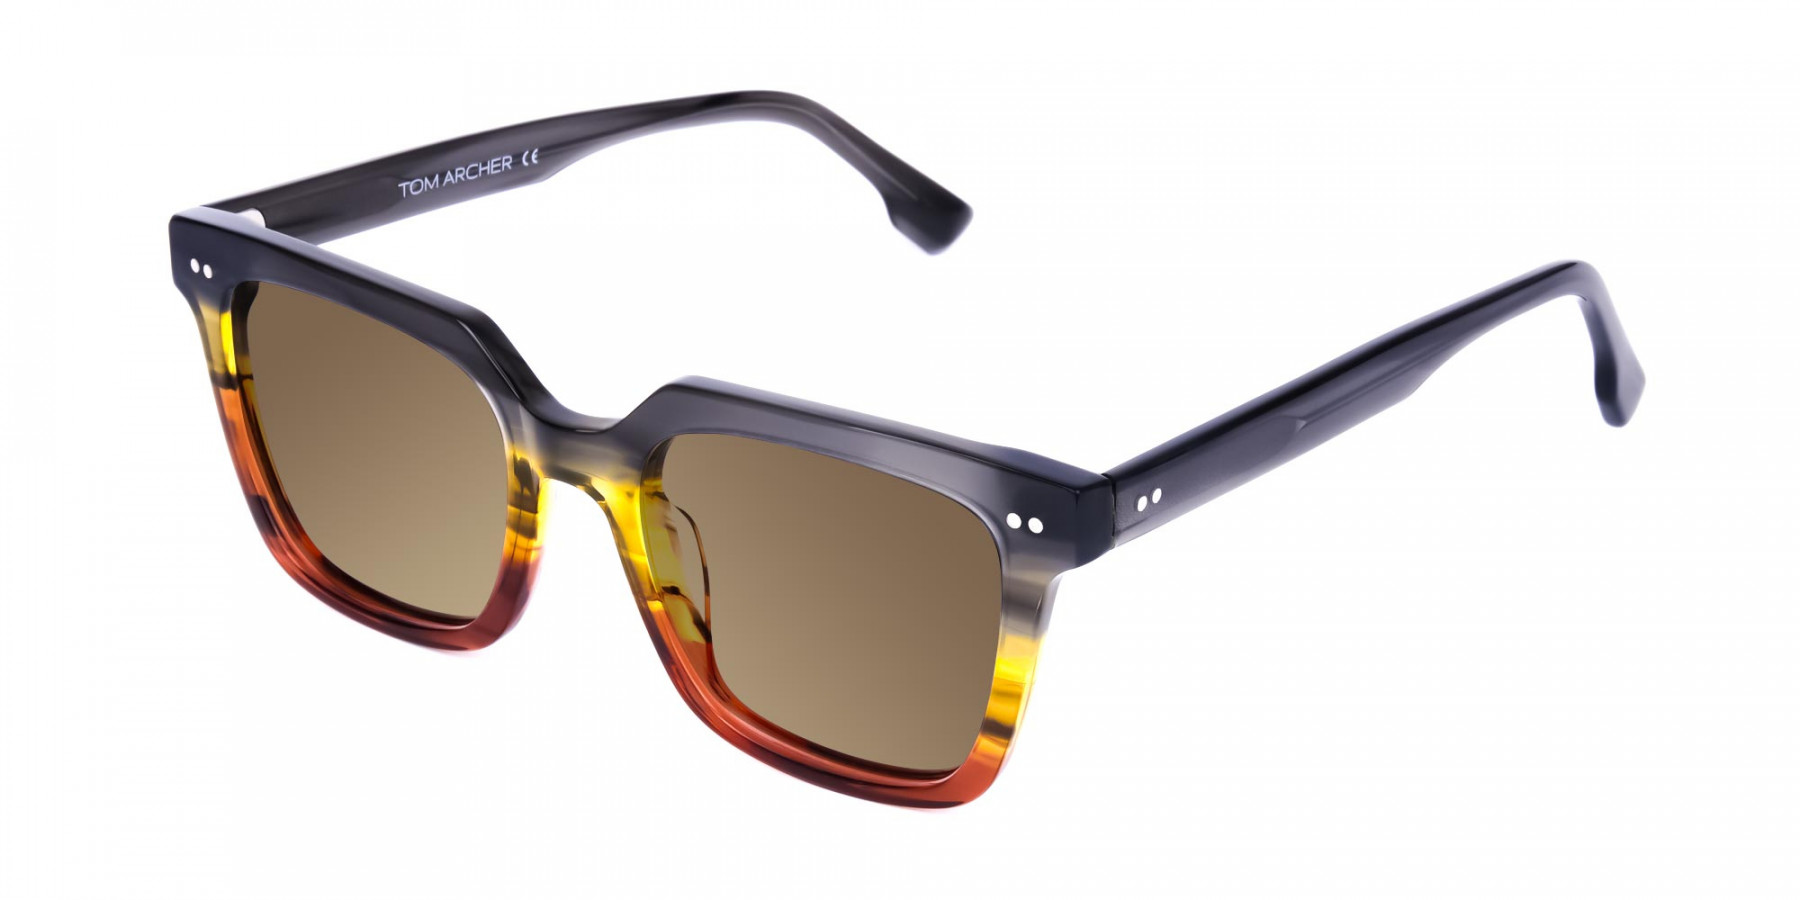 Wayfarer-Brown-Sunglasses-with-Brown-Tint-1